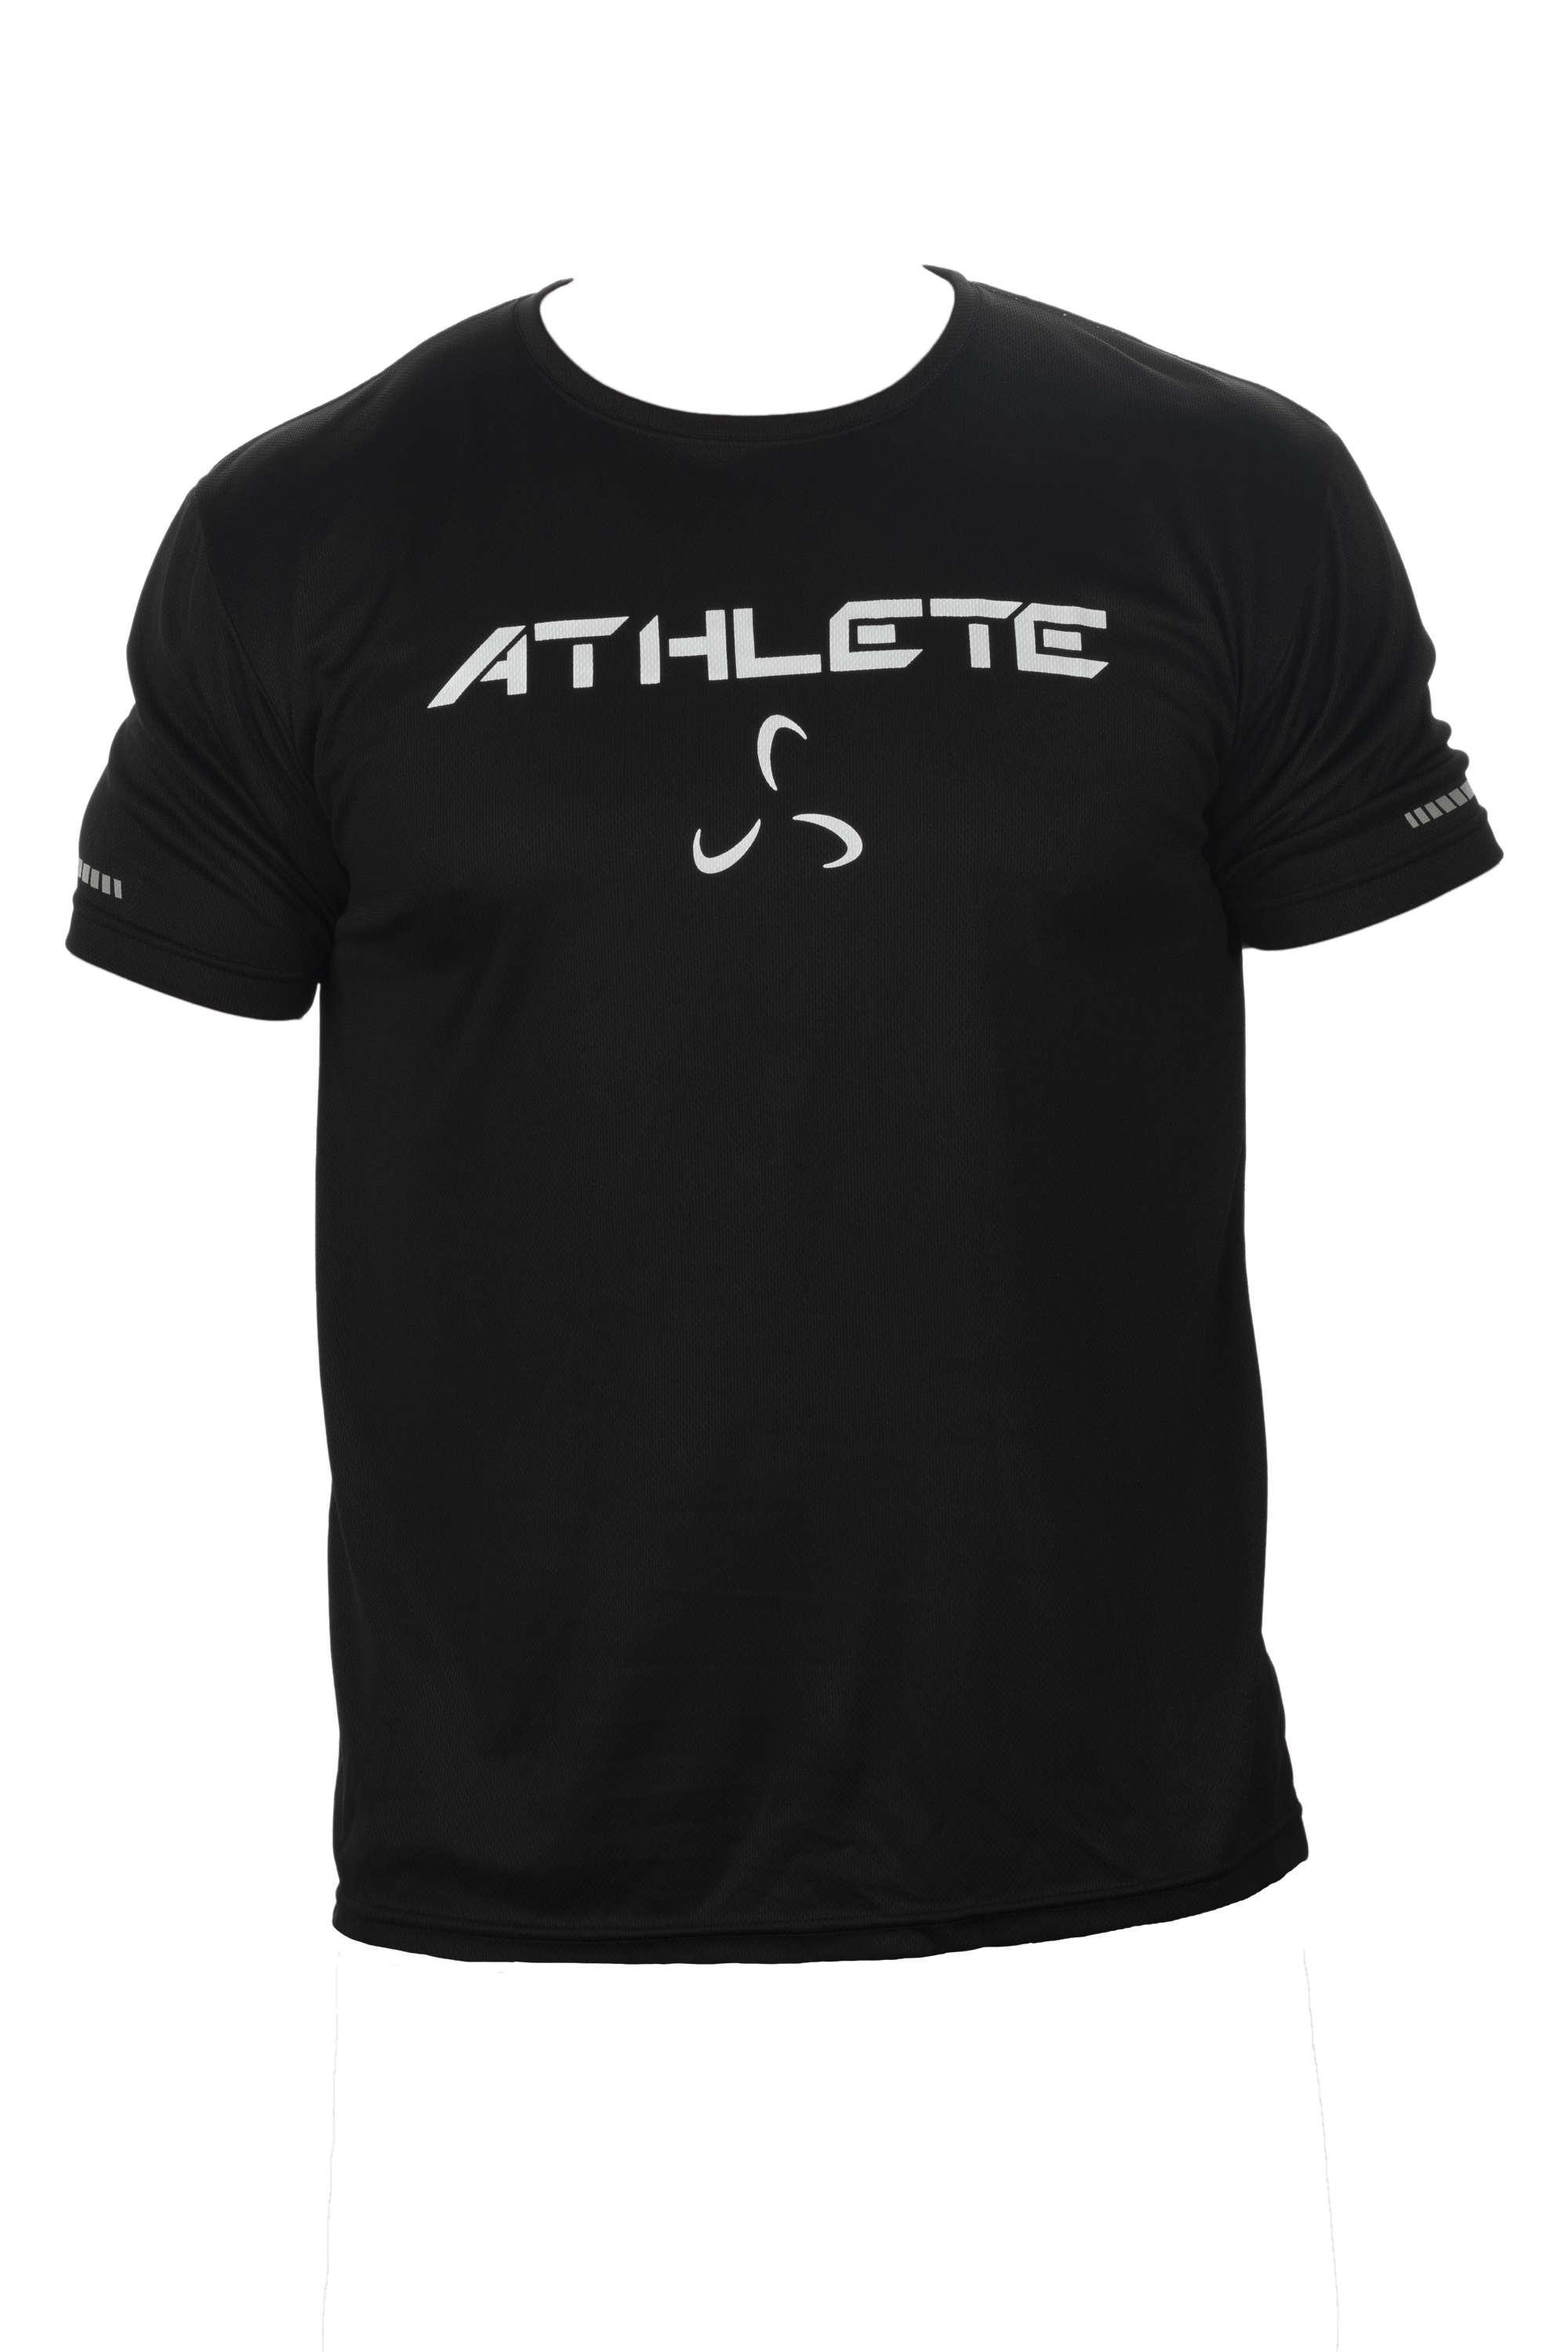 Men's Workout Dri-Fit Shirt - ATHLETE - VALOR FITNESS CLOTHING